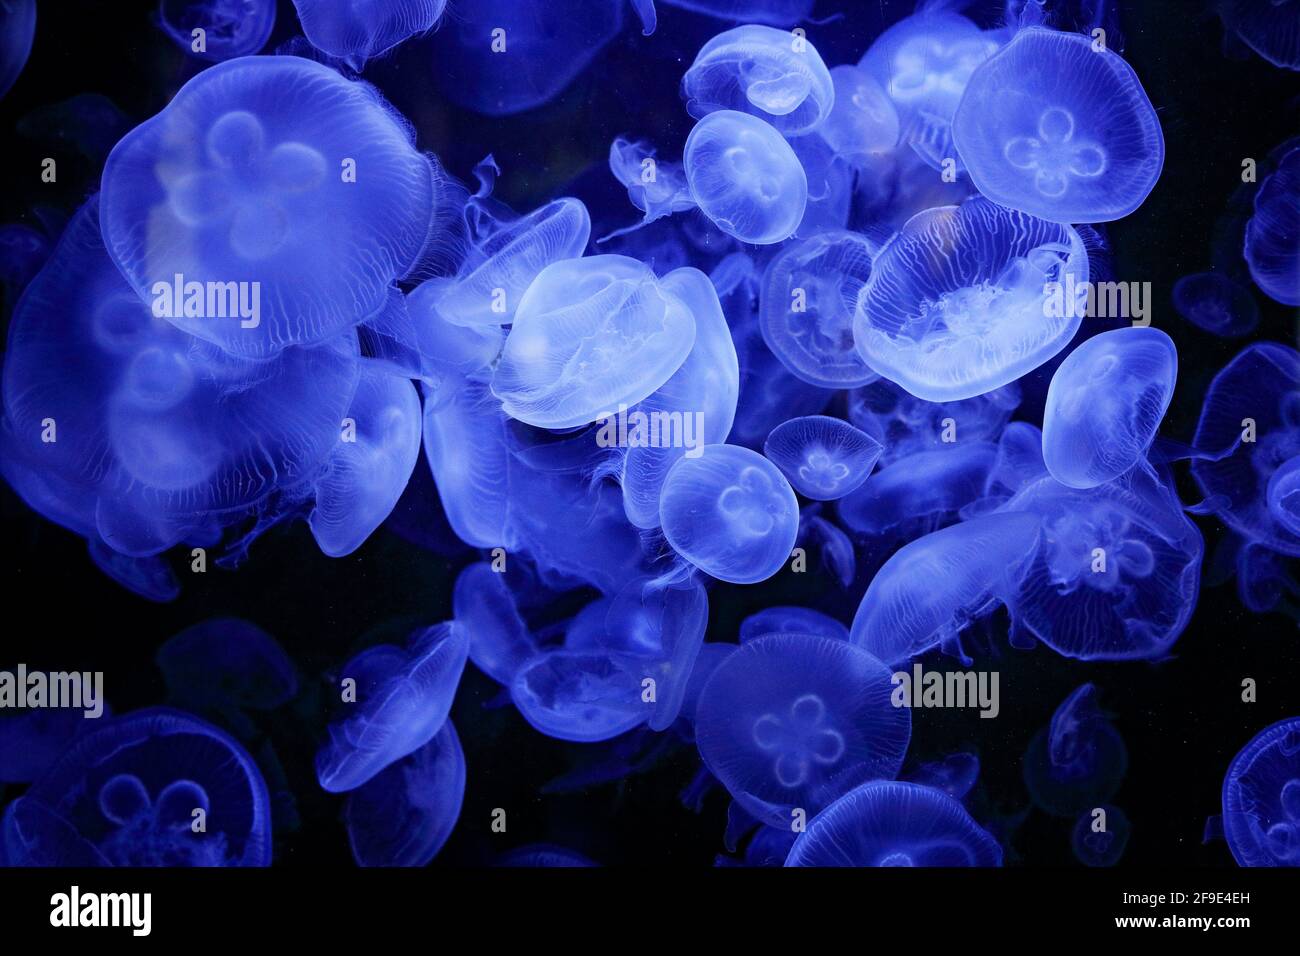 Aurelia labiata, moon jellyfish, in the dark sea water. White blue jellyfish in nature ocean habitat. Water floating bell medusa from Pacific, Japan a Stock Photo